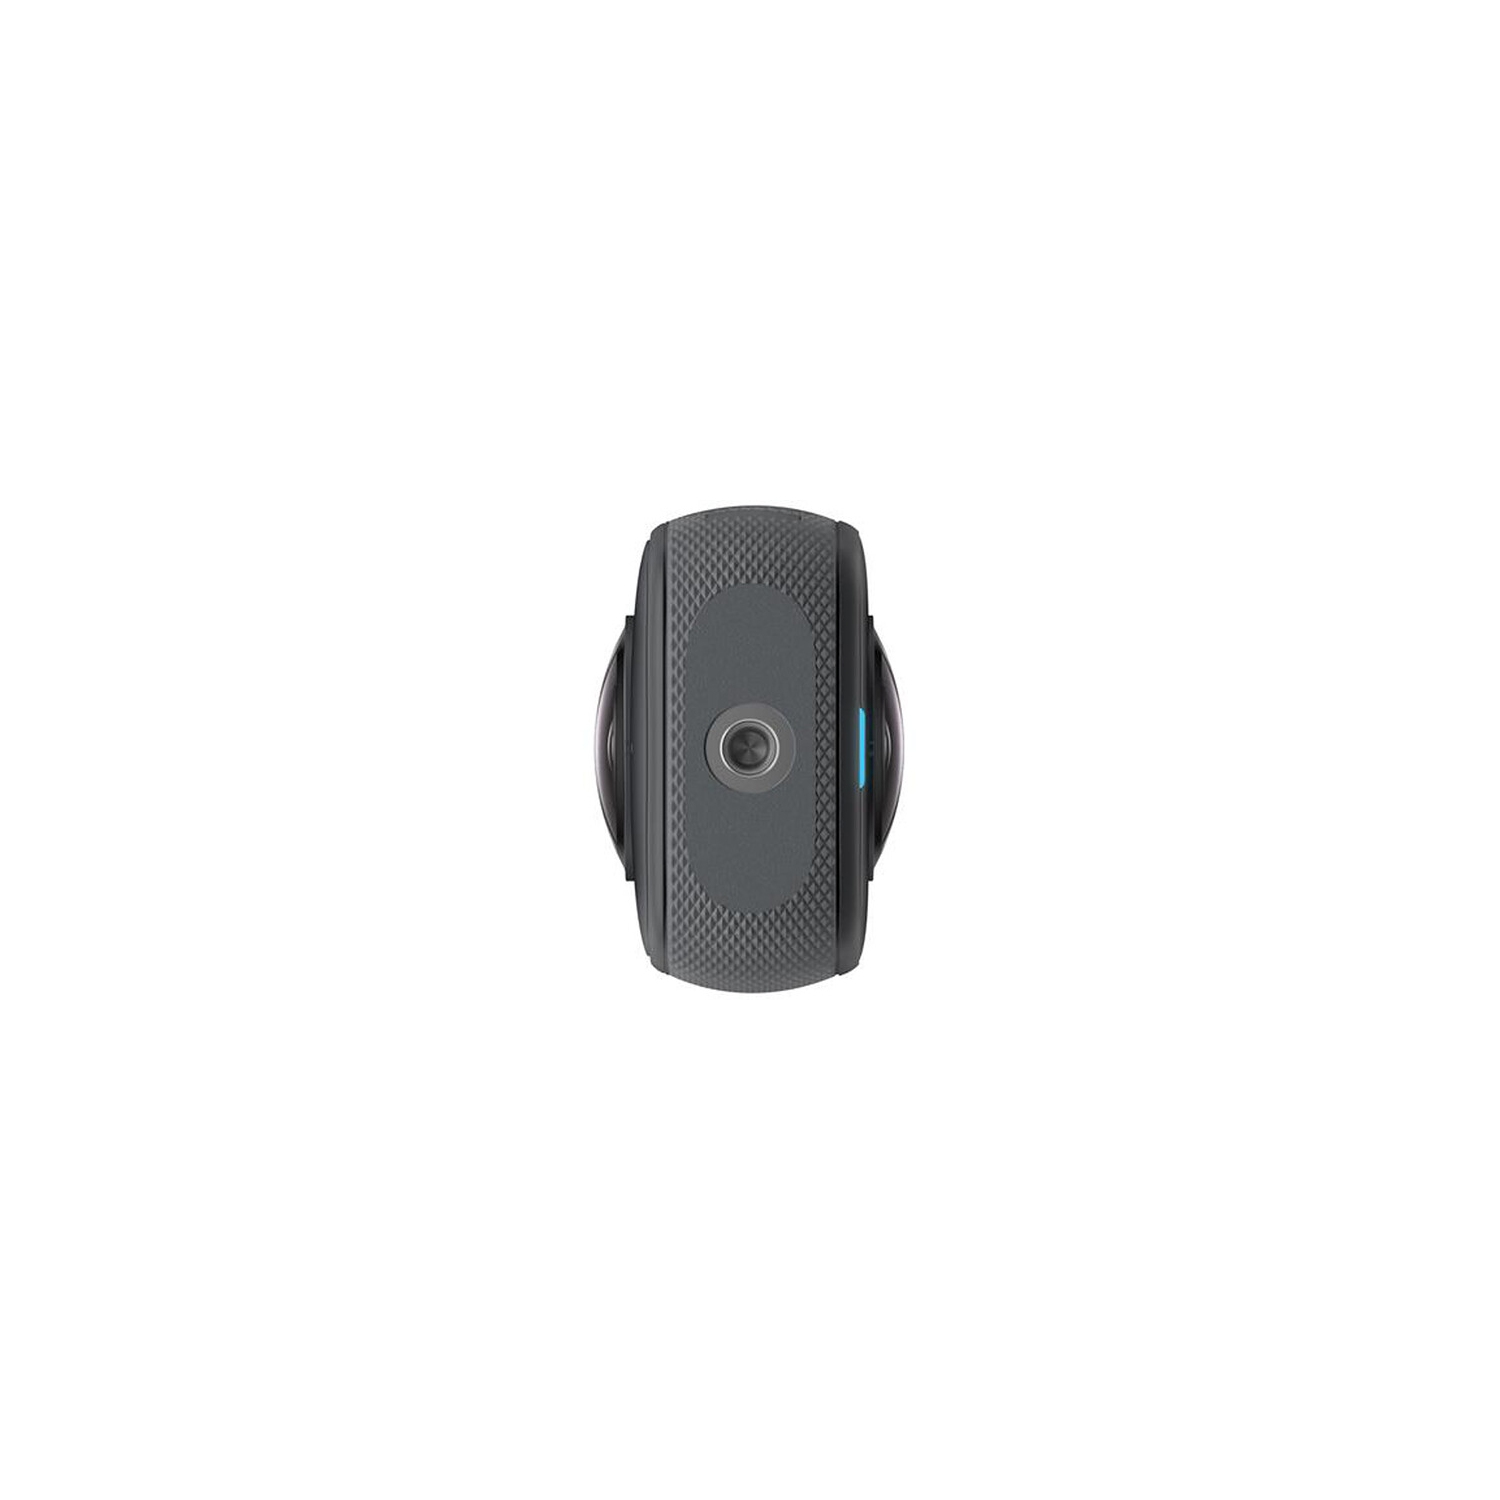 Insta360 X3 - Waterproof 360 Camera + 50-in-1 Accessory Kit + 64GB